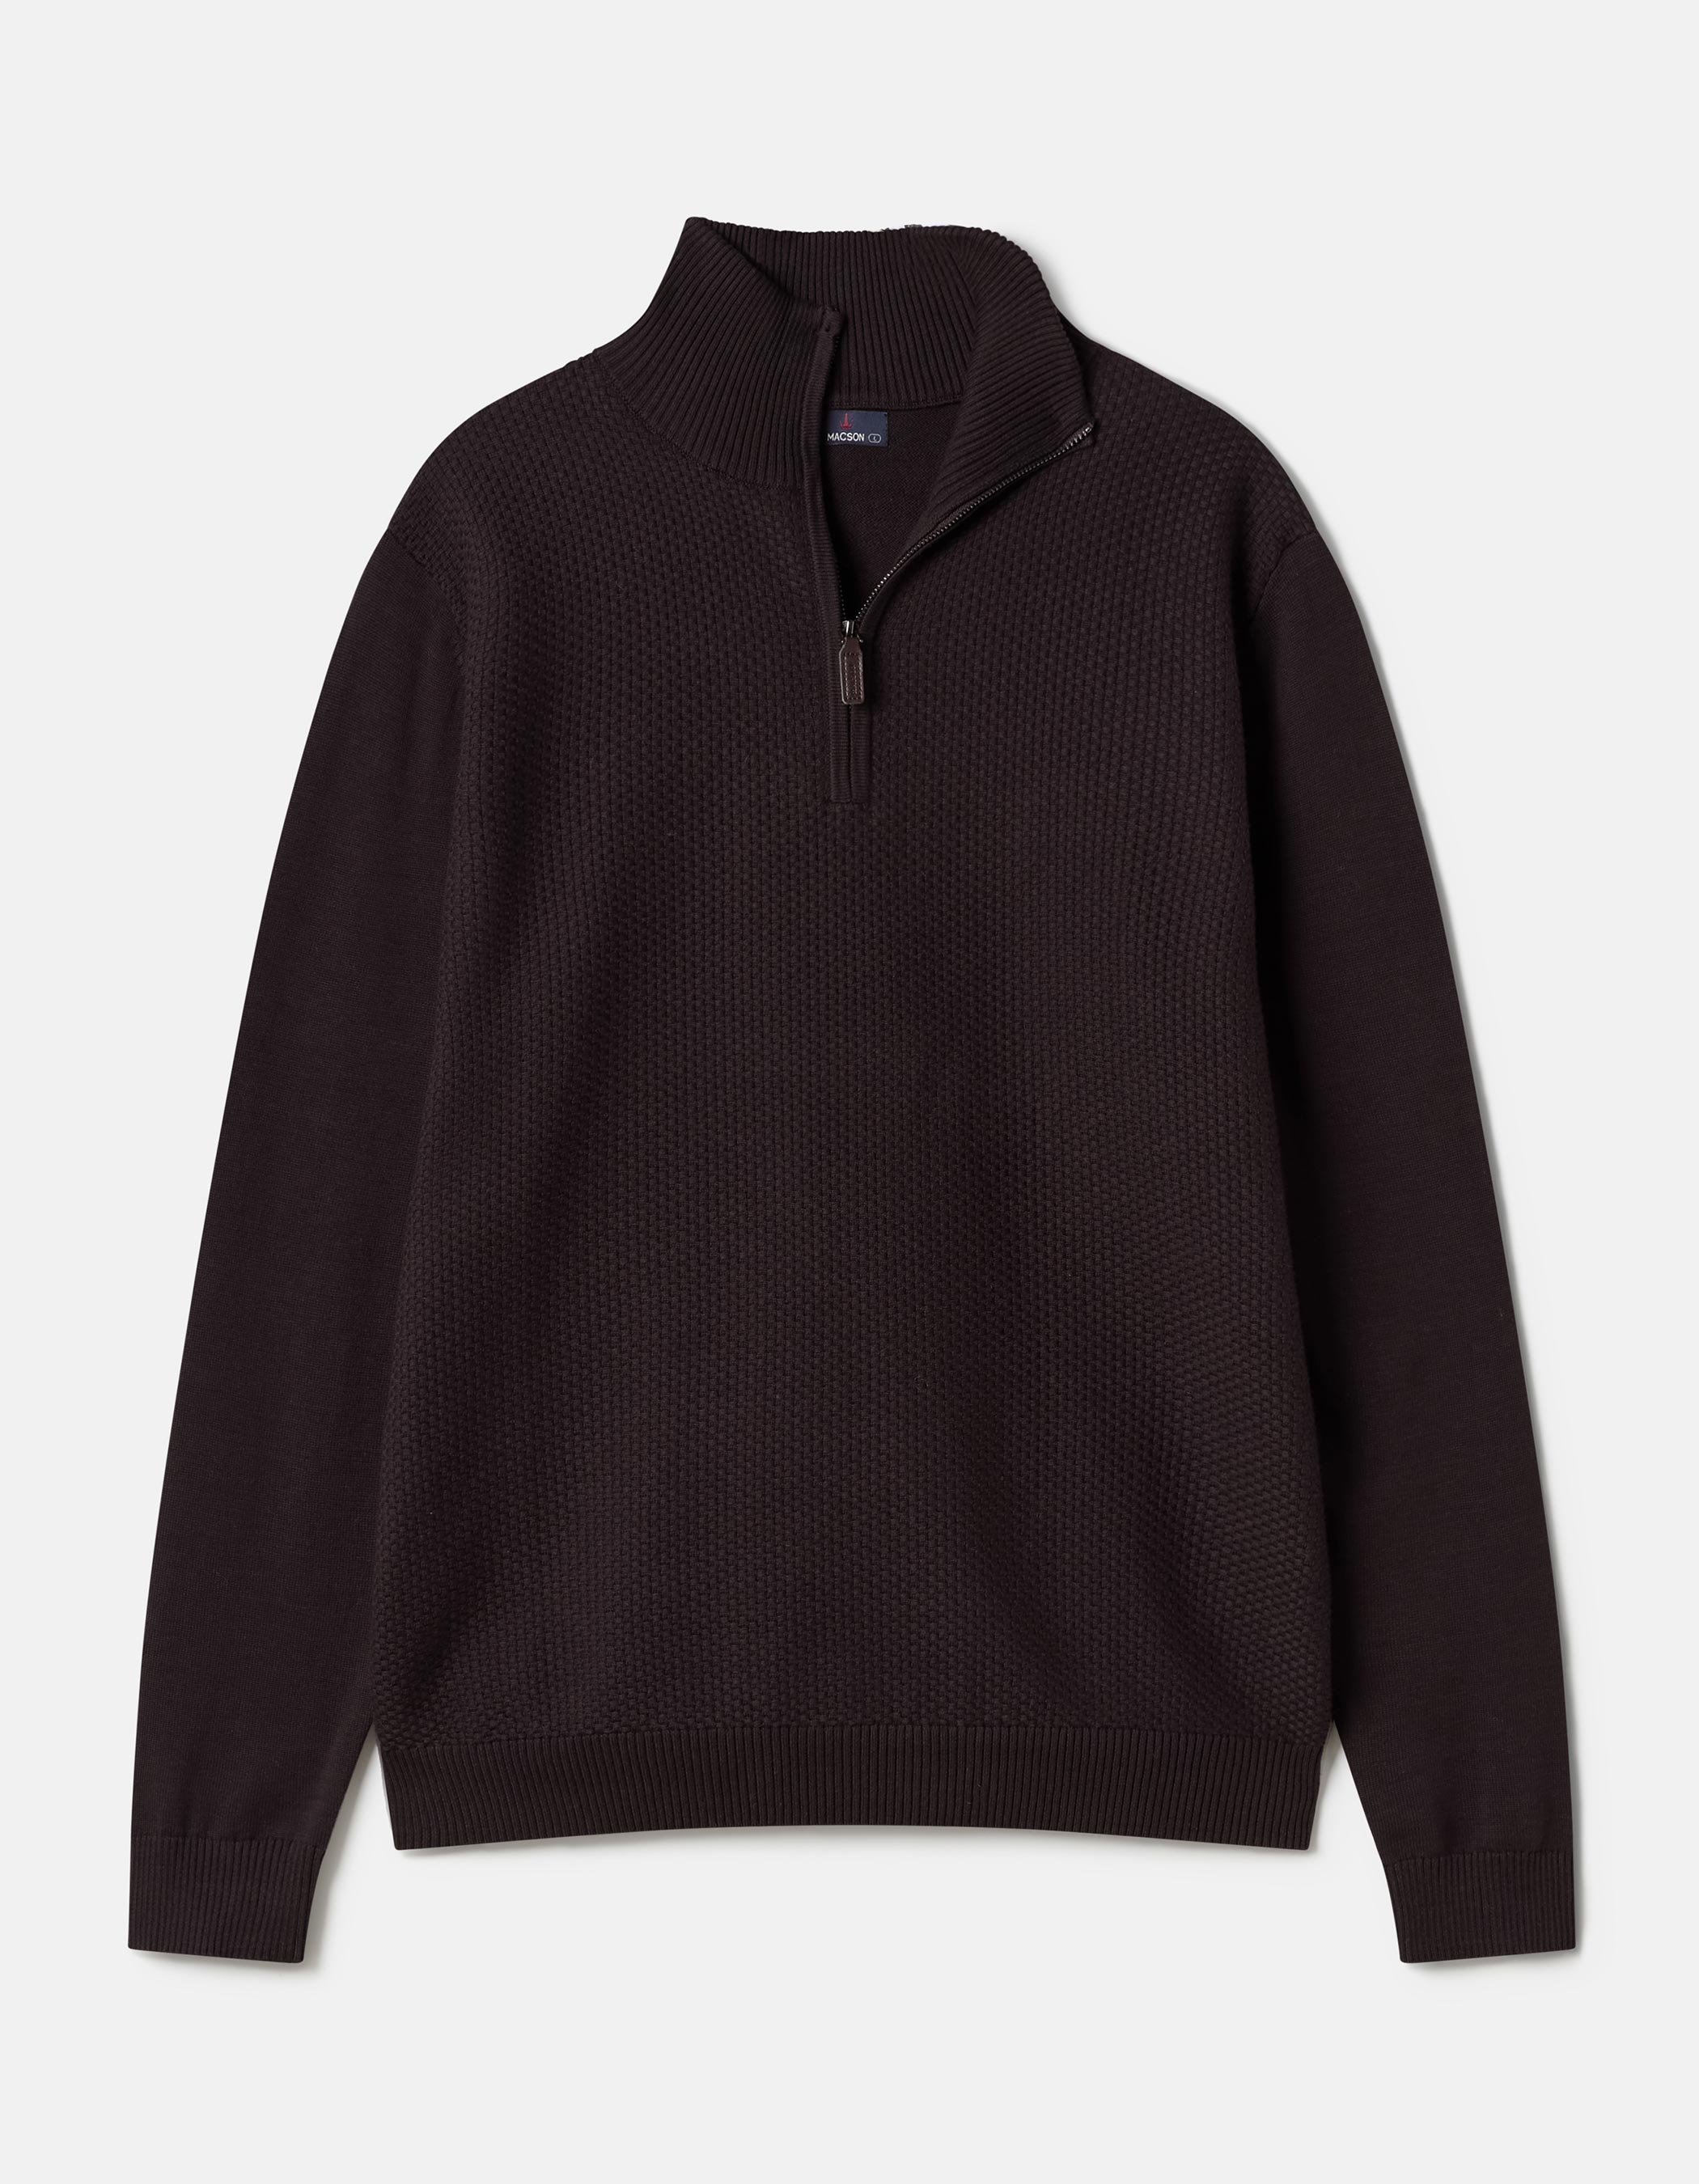 100% cotton sweater zip